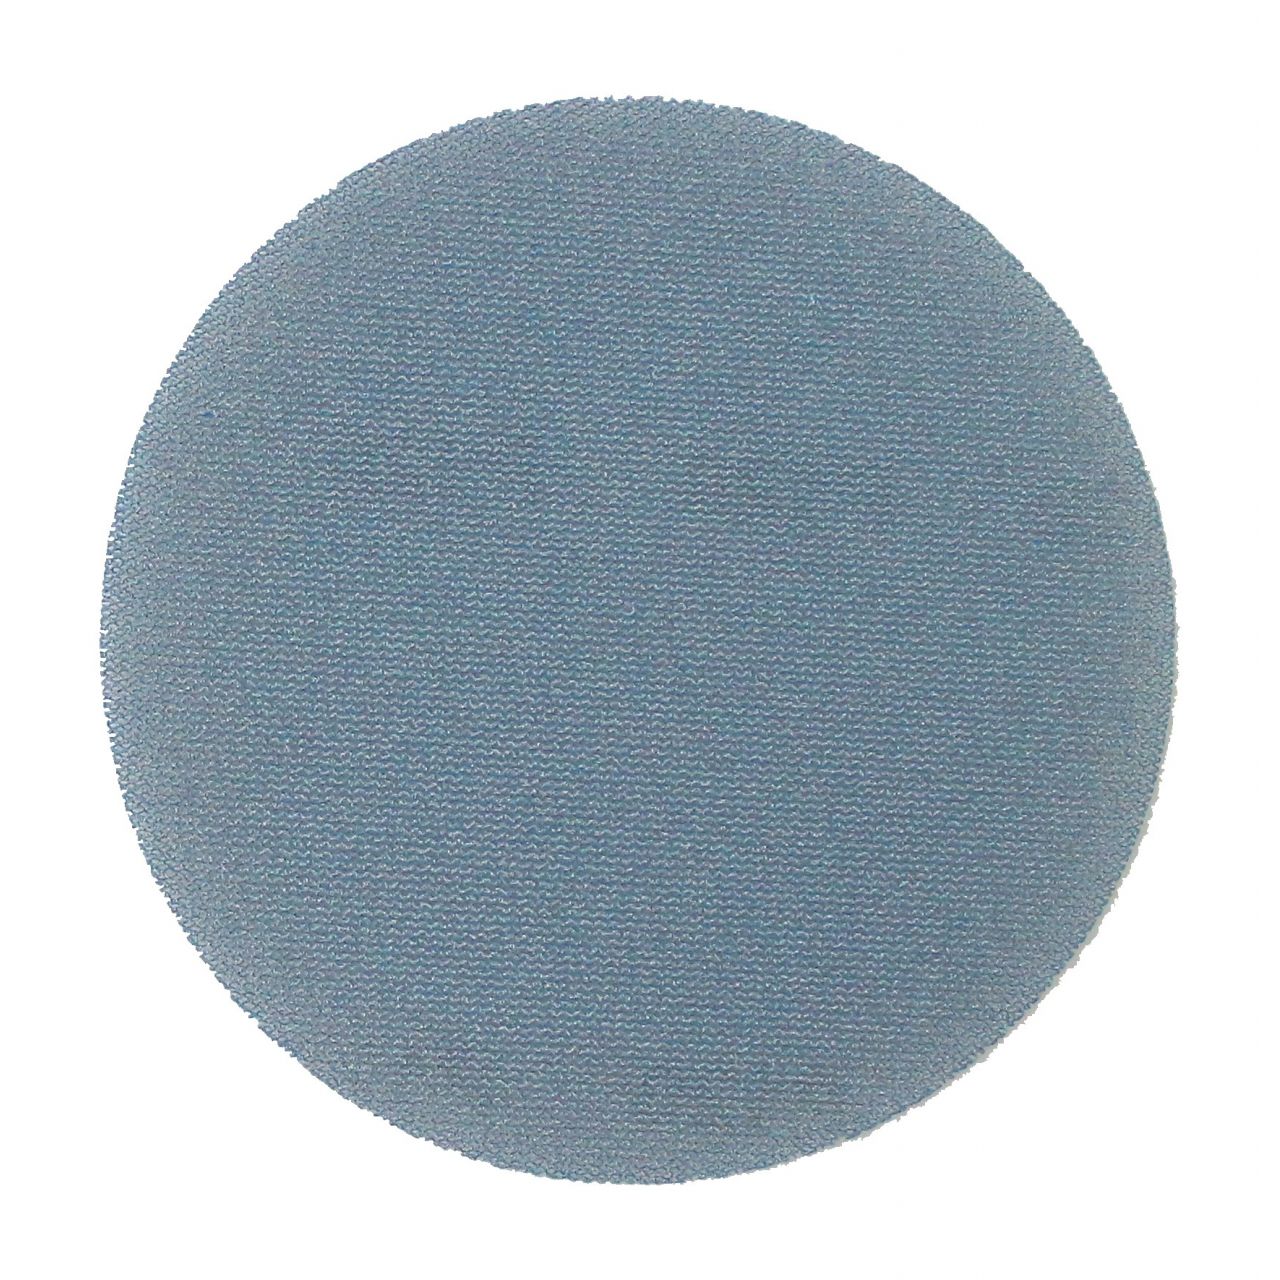 50 Discos de malla abrasiva autoadherente azul MAB (150/100)